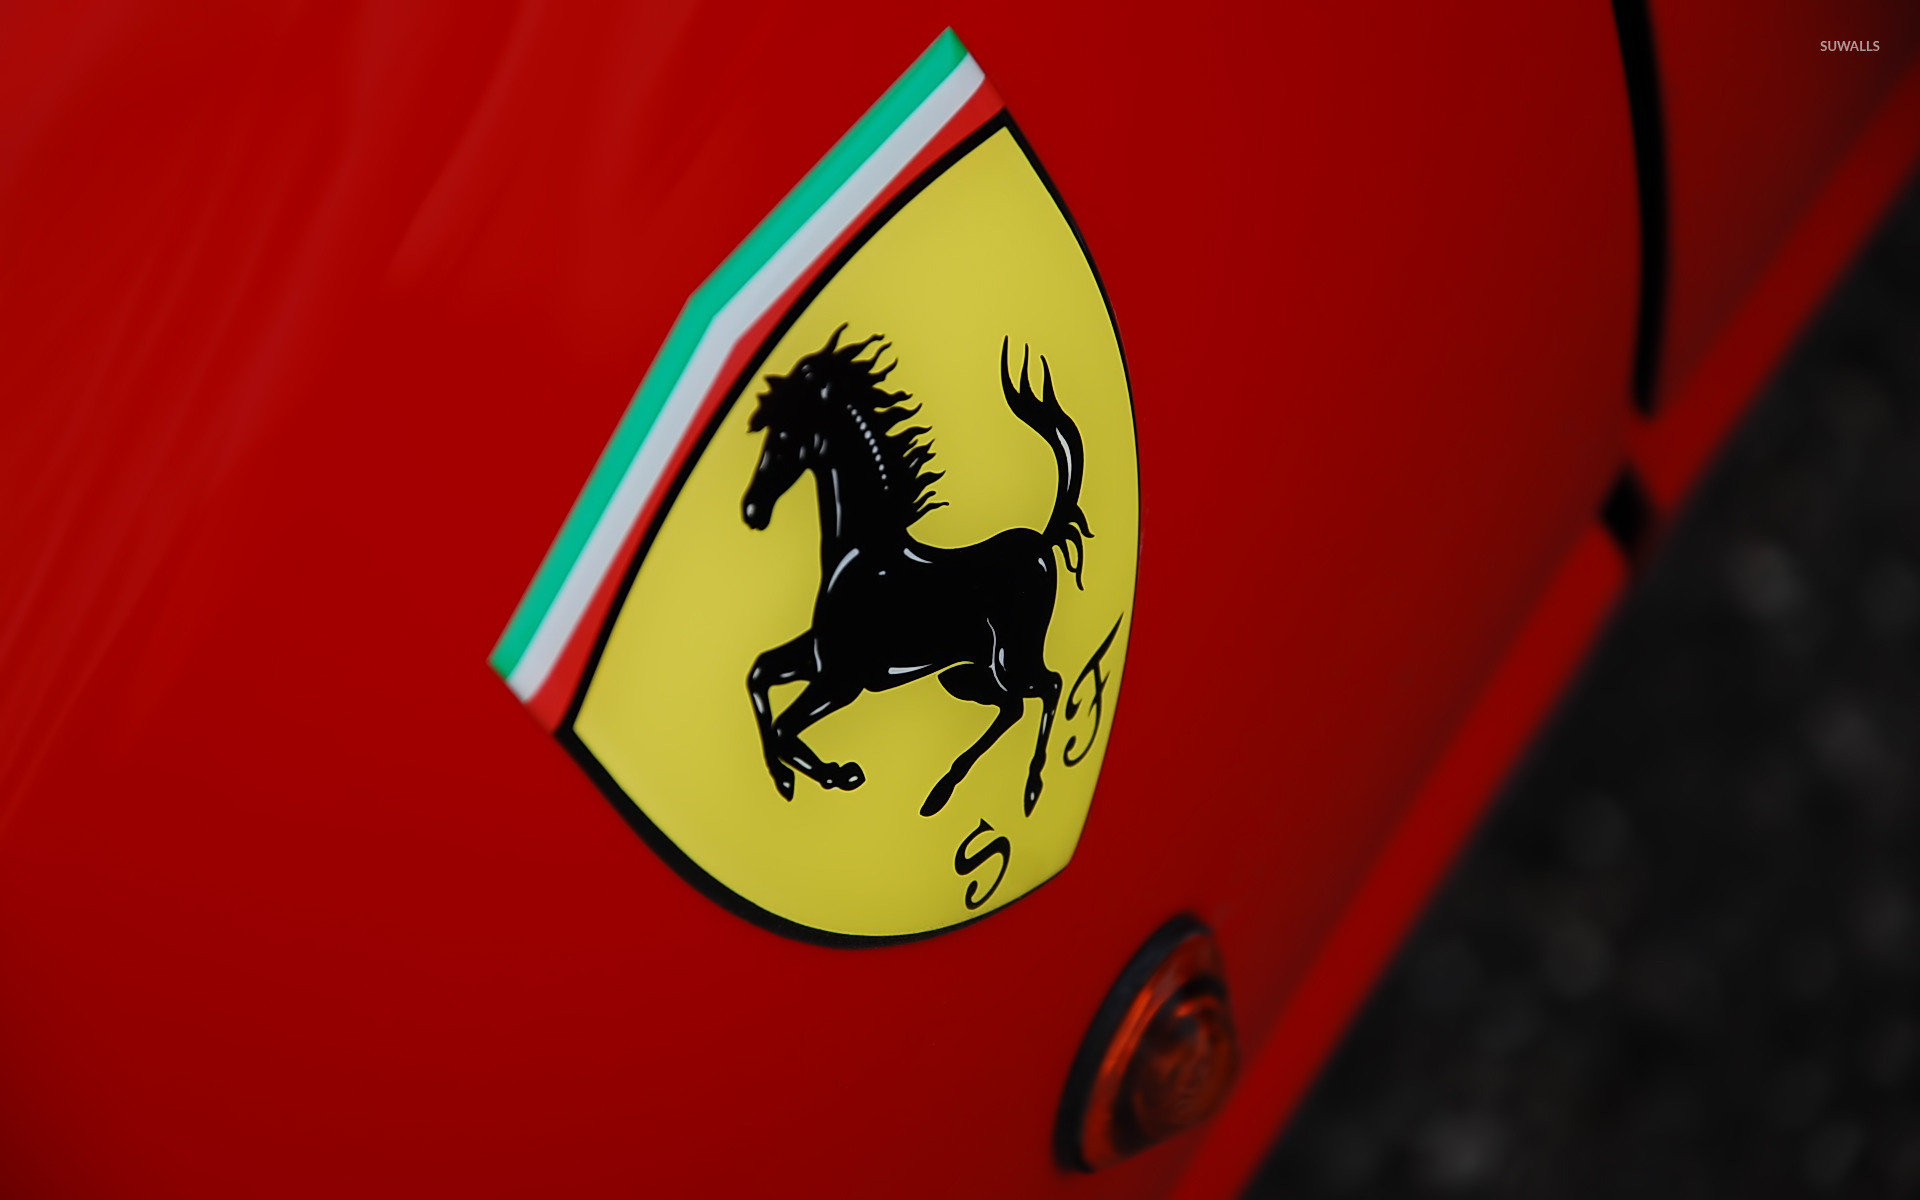 Ferrari logo wallpaper - Car wallpapers - #38032